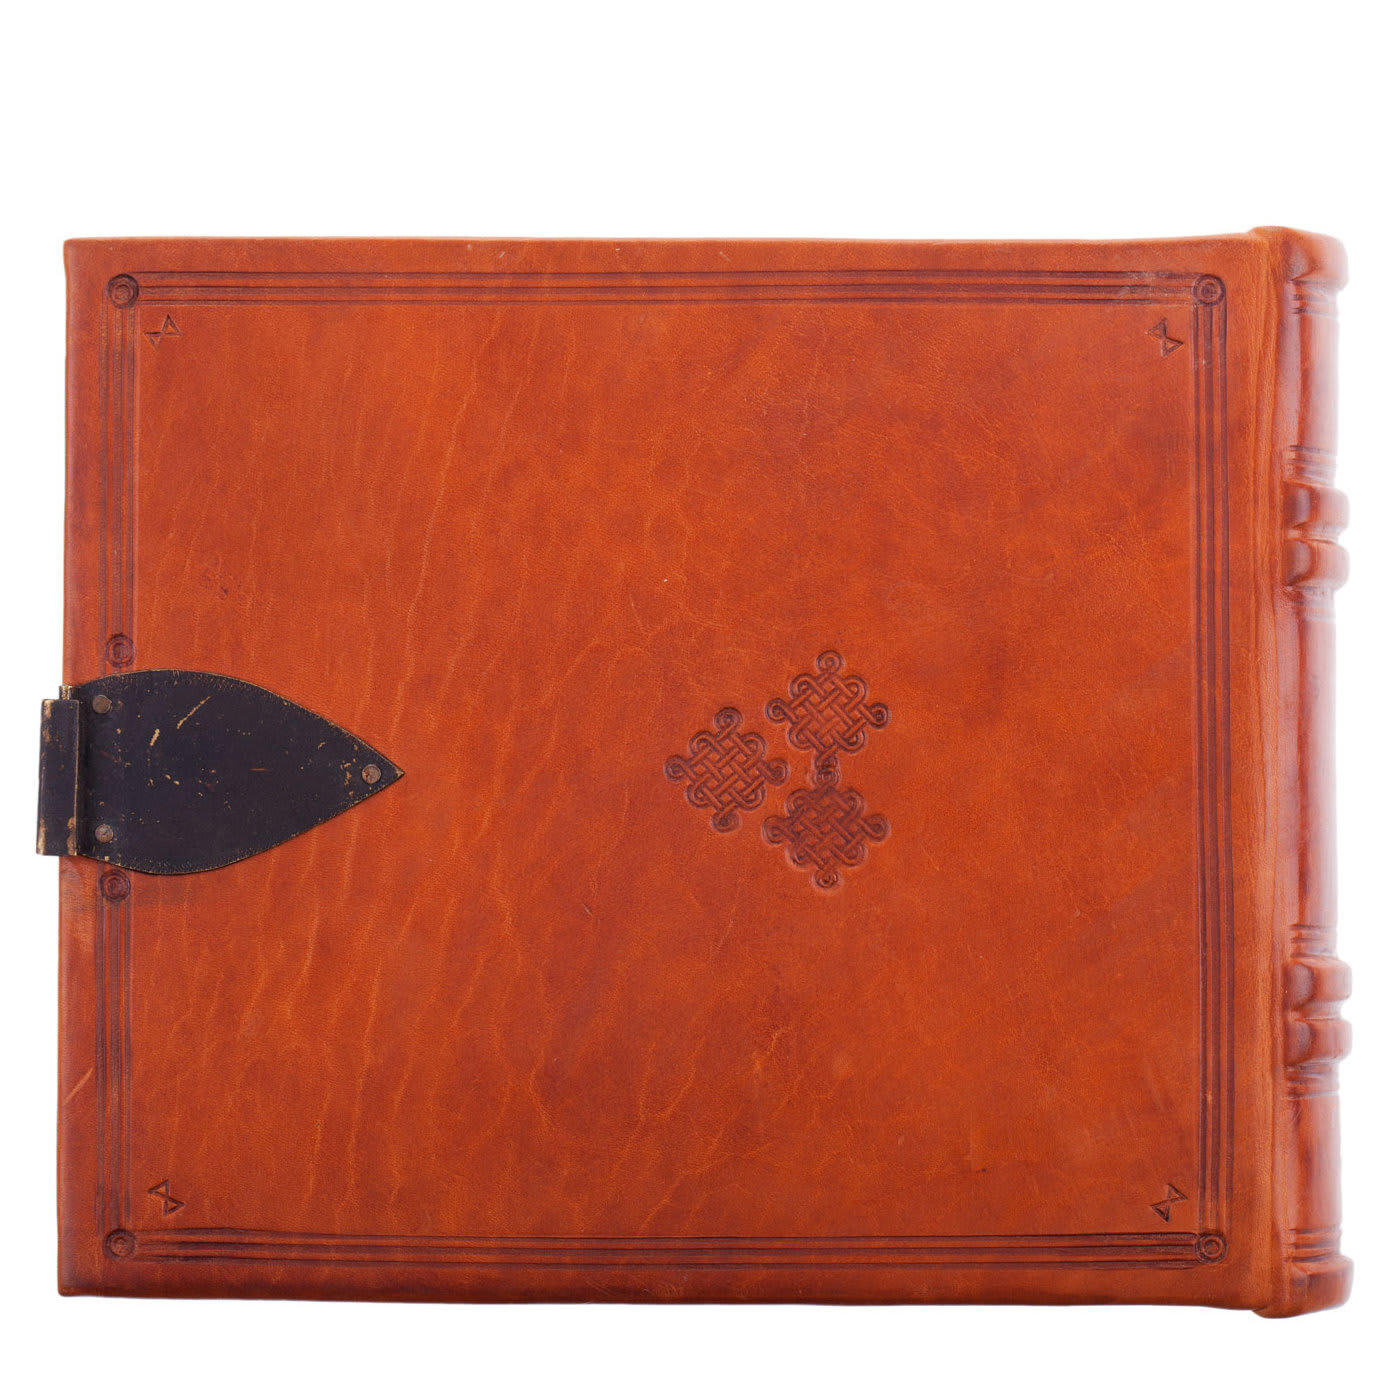 Monastico Landsape Leather Book - Giannini